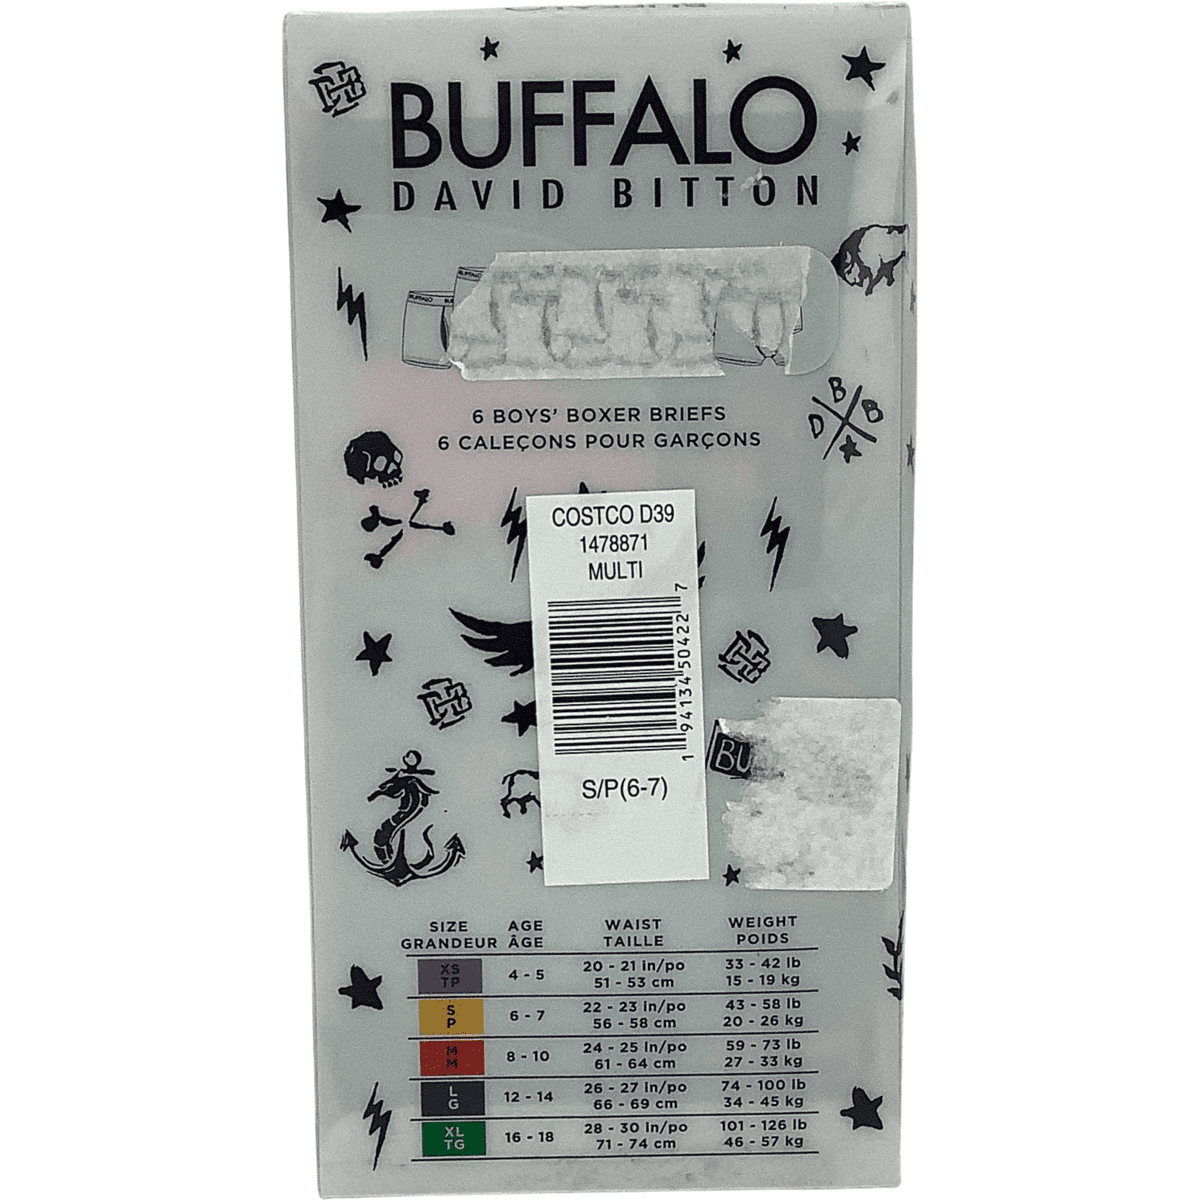 Buffalo David Bitton, Accessories, New Buffalo Boxer Briefs 6 Pairs